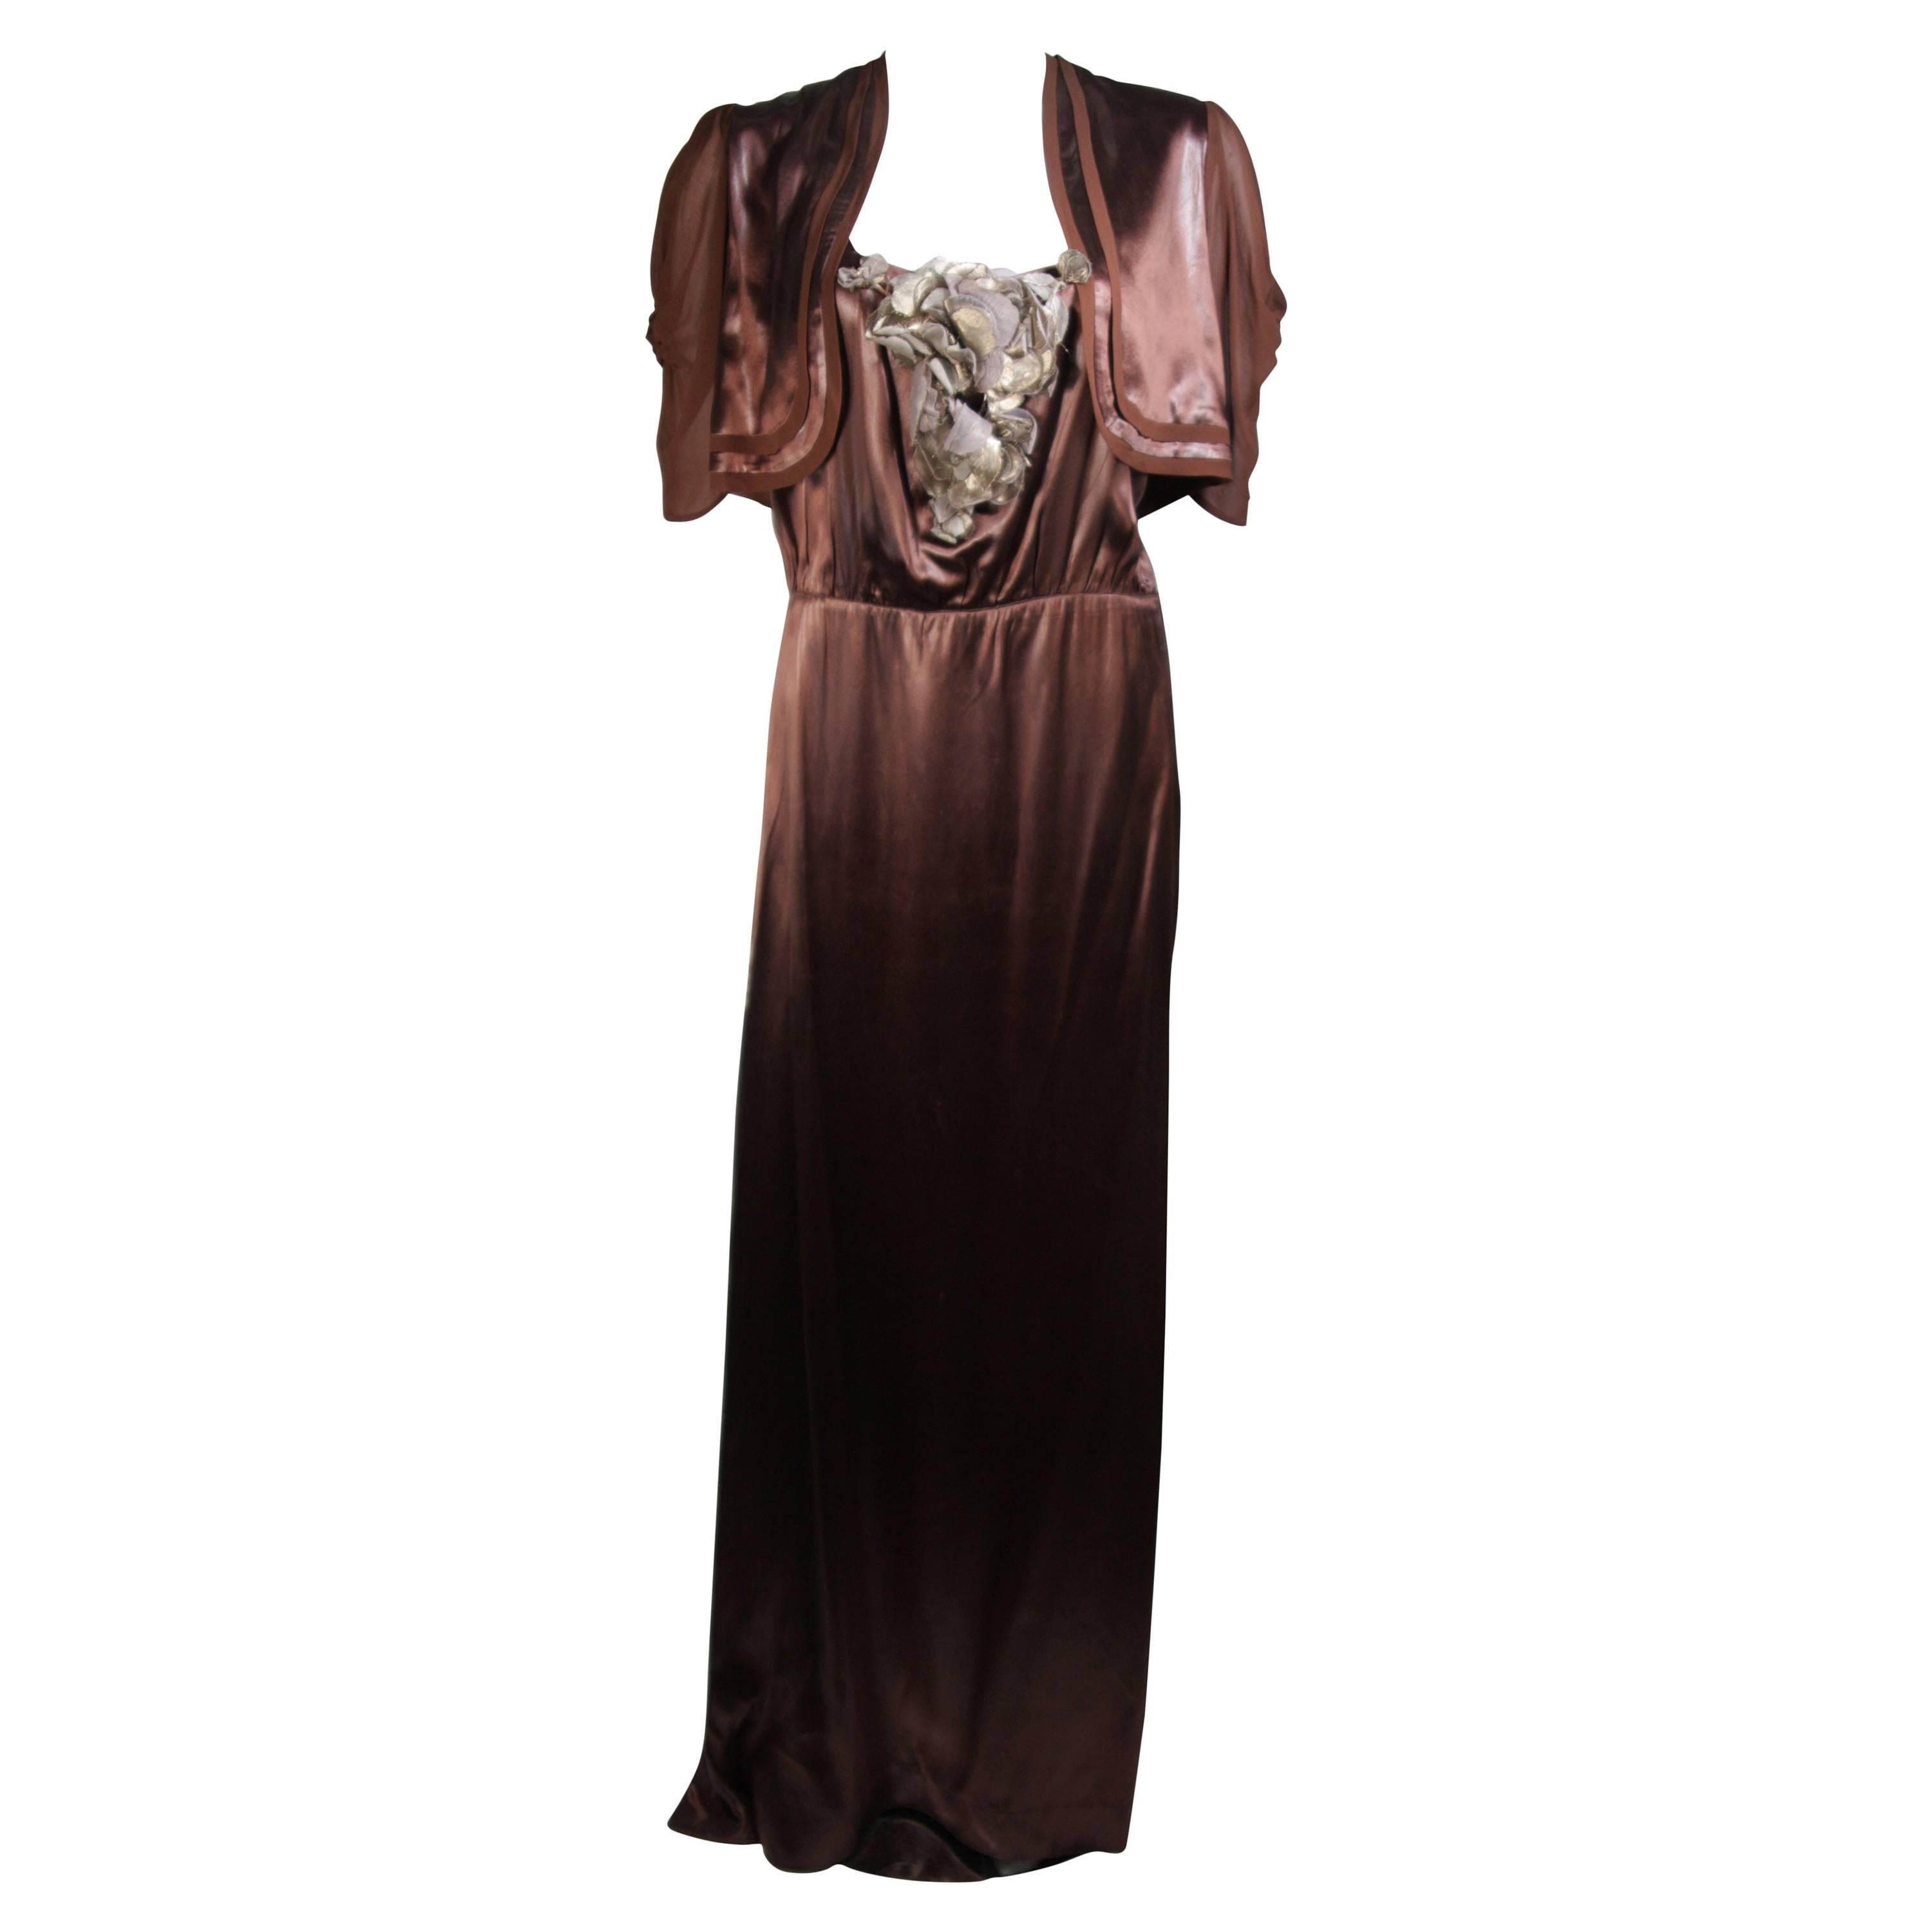 Madame Eme - Robe en soie marron sur mesure avec boléro, taille S, années 1920 en vente